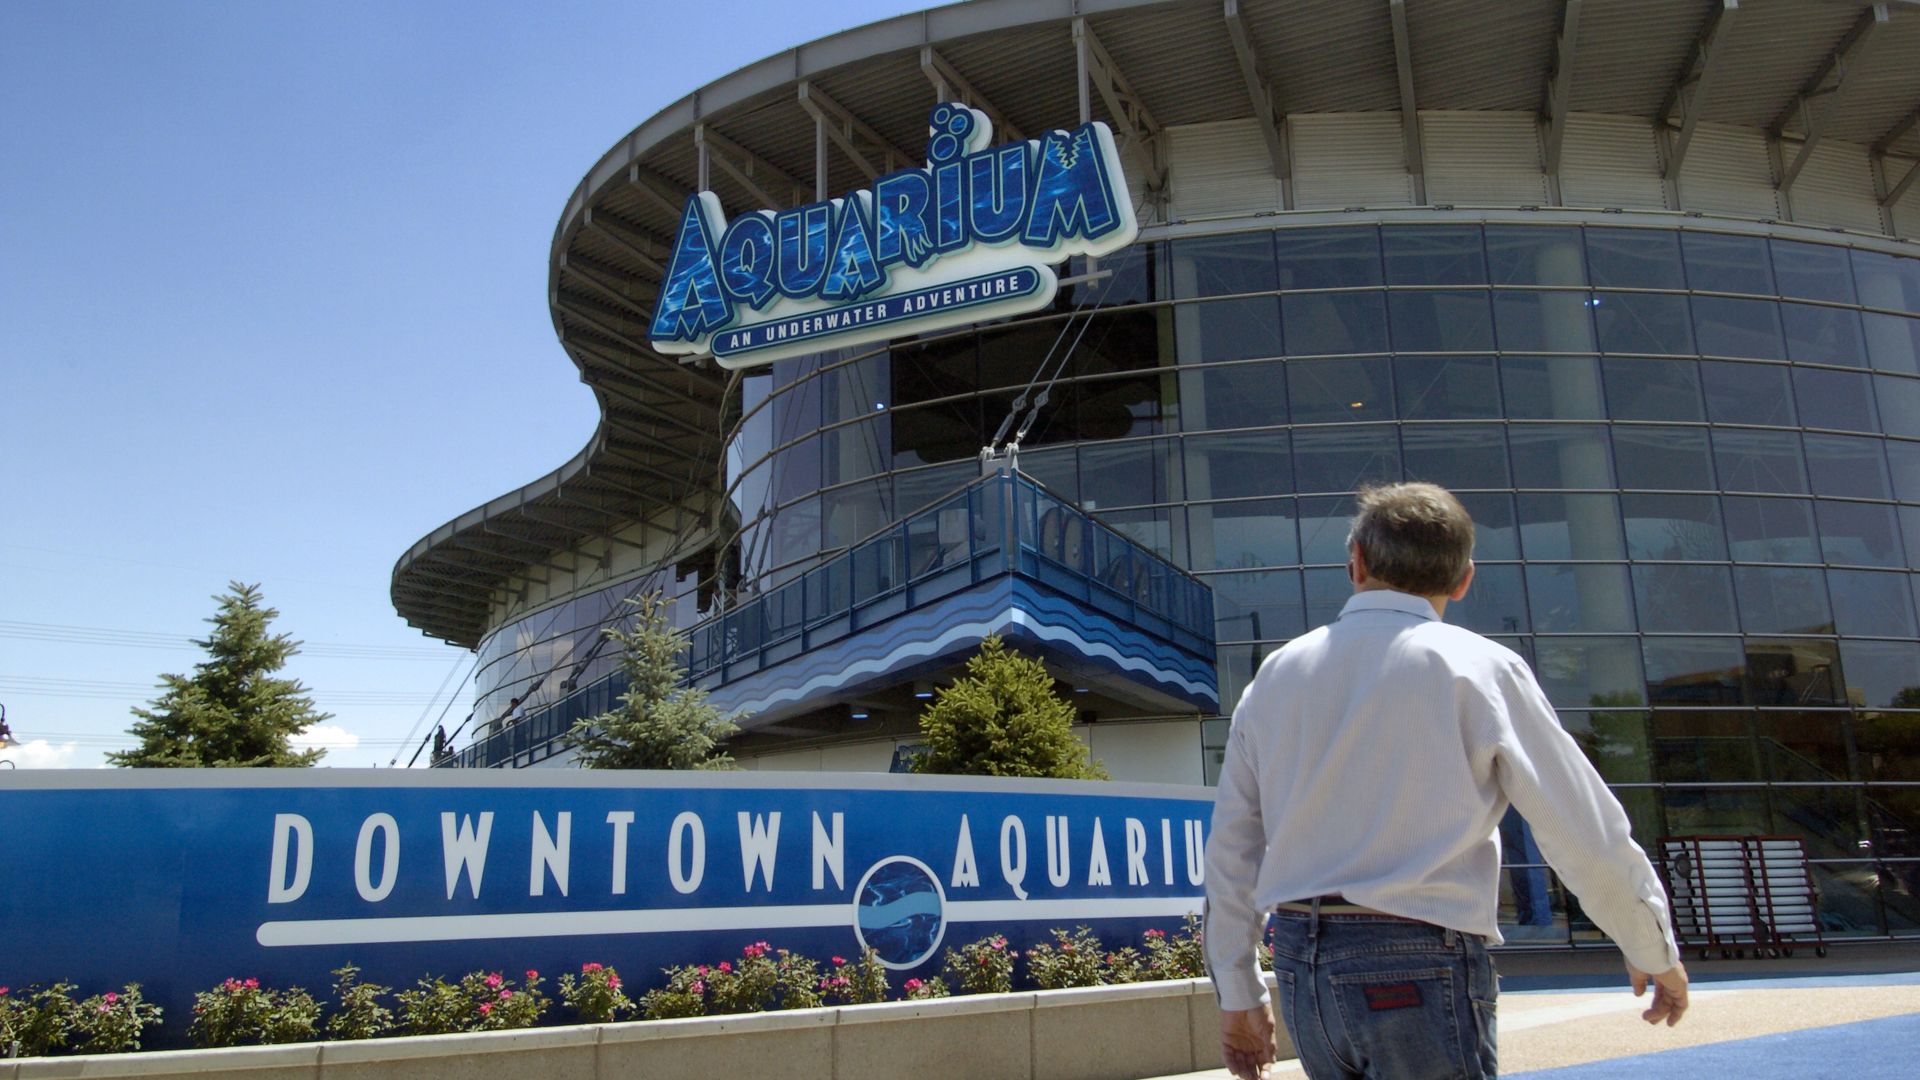 Employees raise concerns about Denver's Downtown Aquarium - Axios